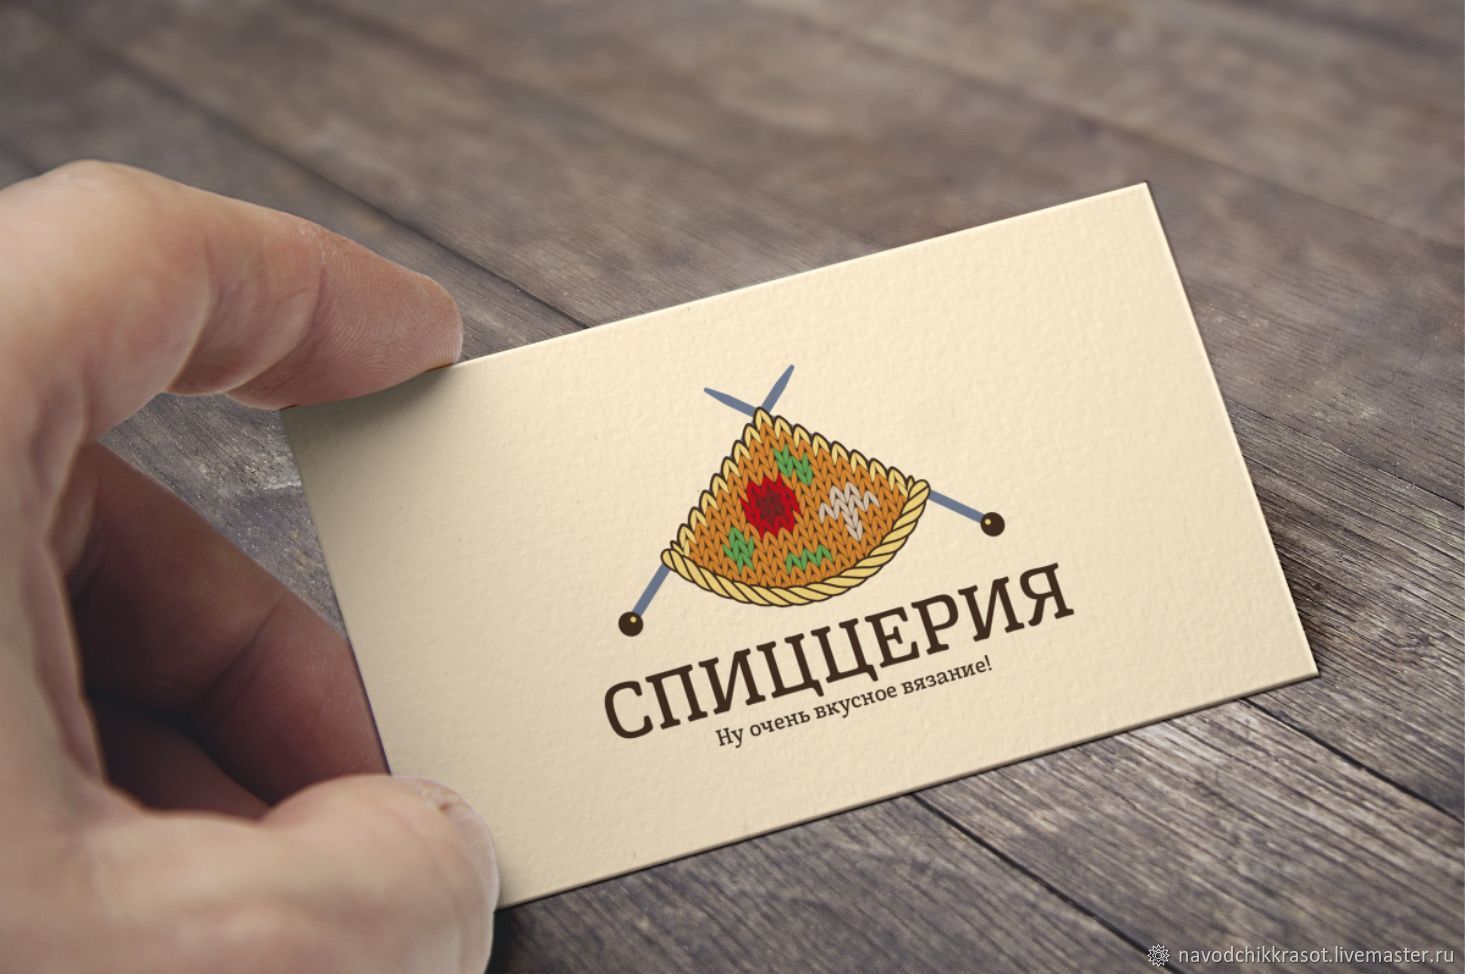 Логотип на визитку. Логотип для визитки. Визитки с логотипом компании. Два логотипа на одной визитке. Креативные визитки.